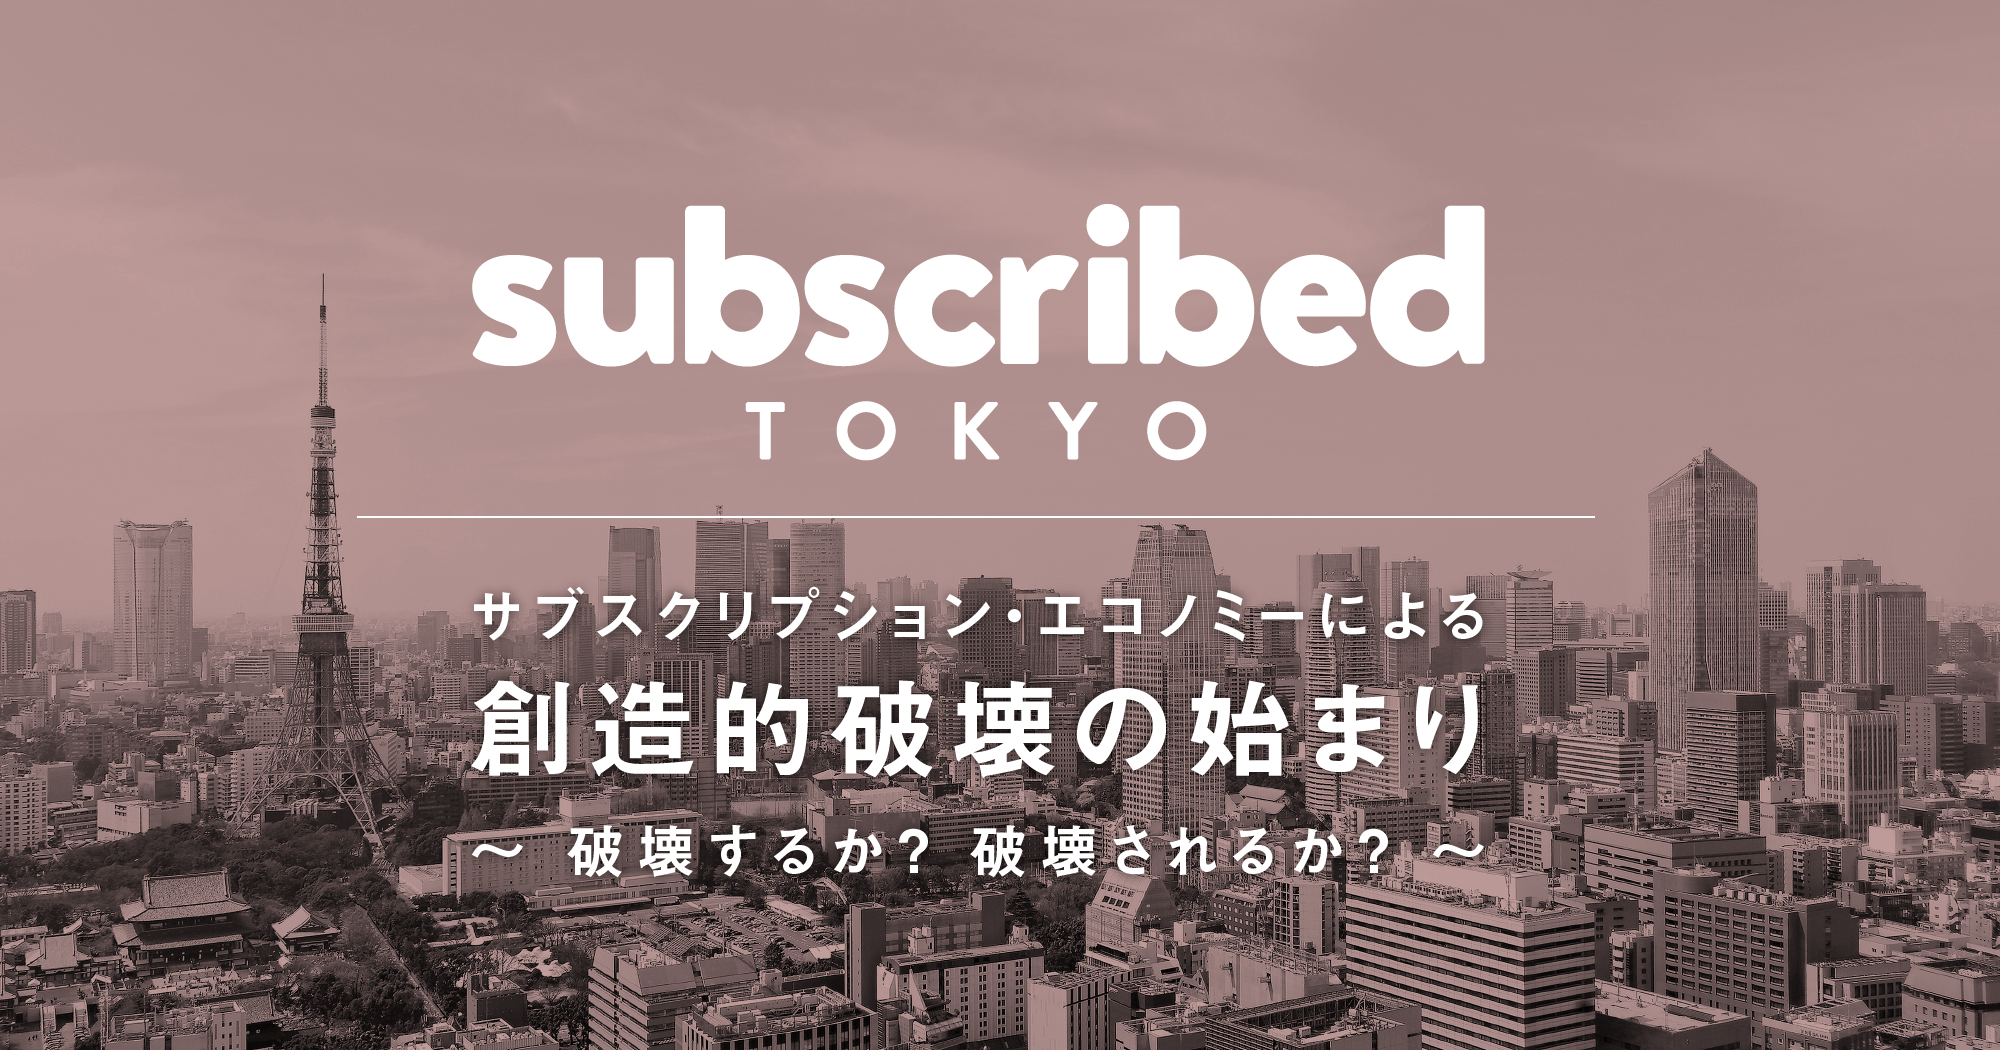 Subscribed Tokyo 2017